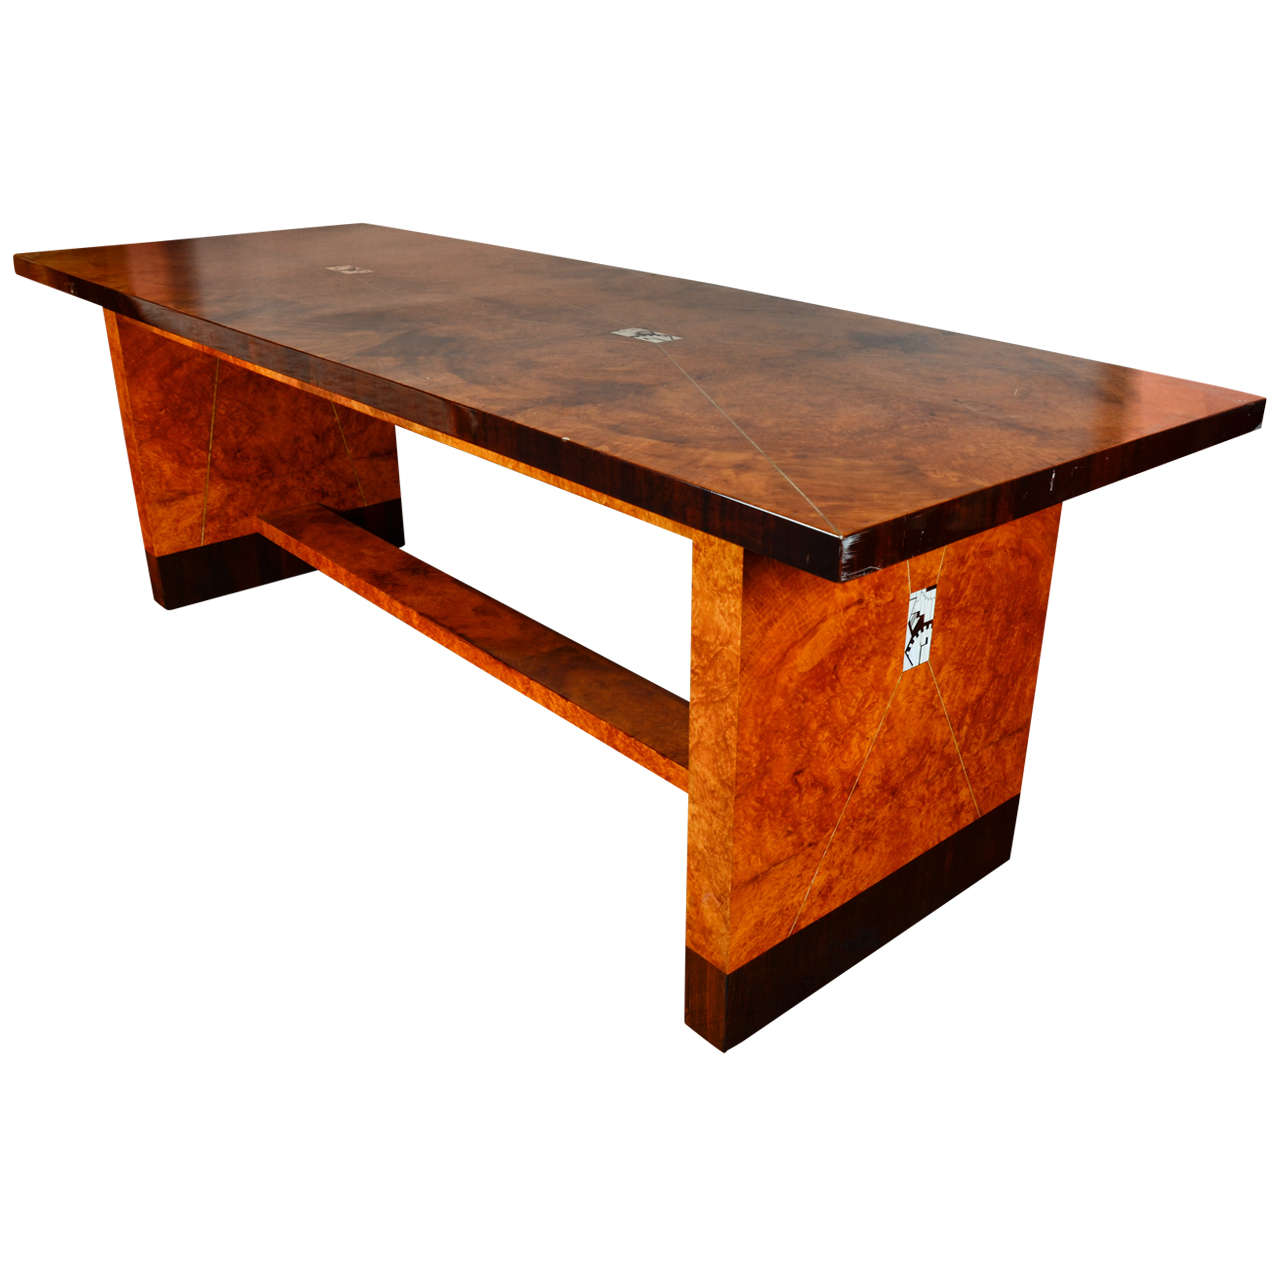 Leon Jallot 1930s Center Table For Sale